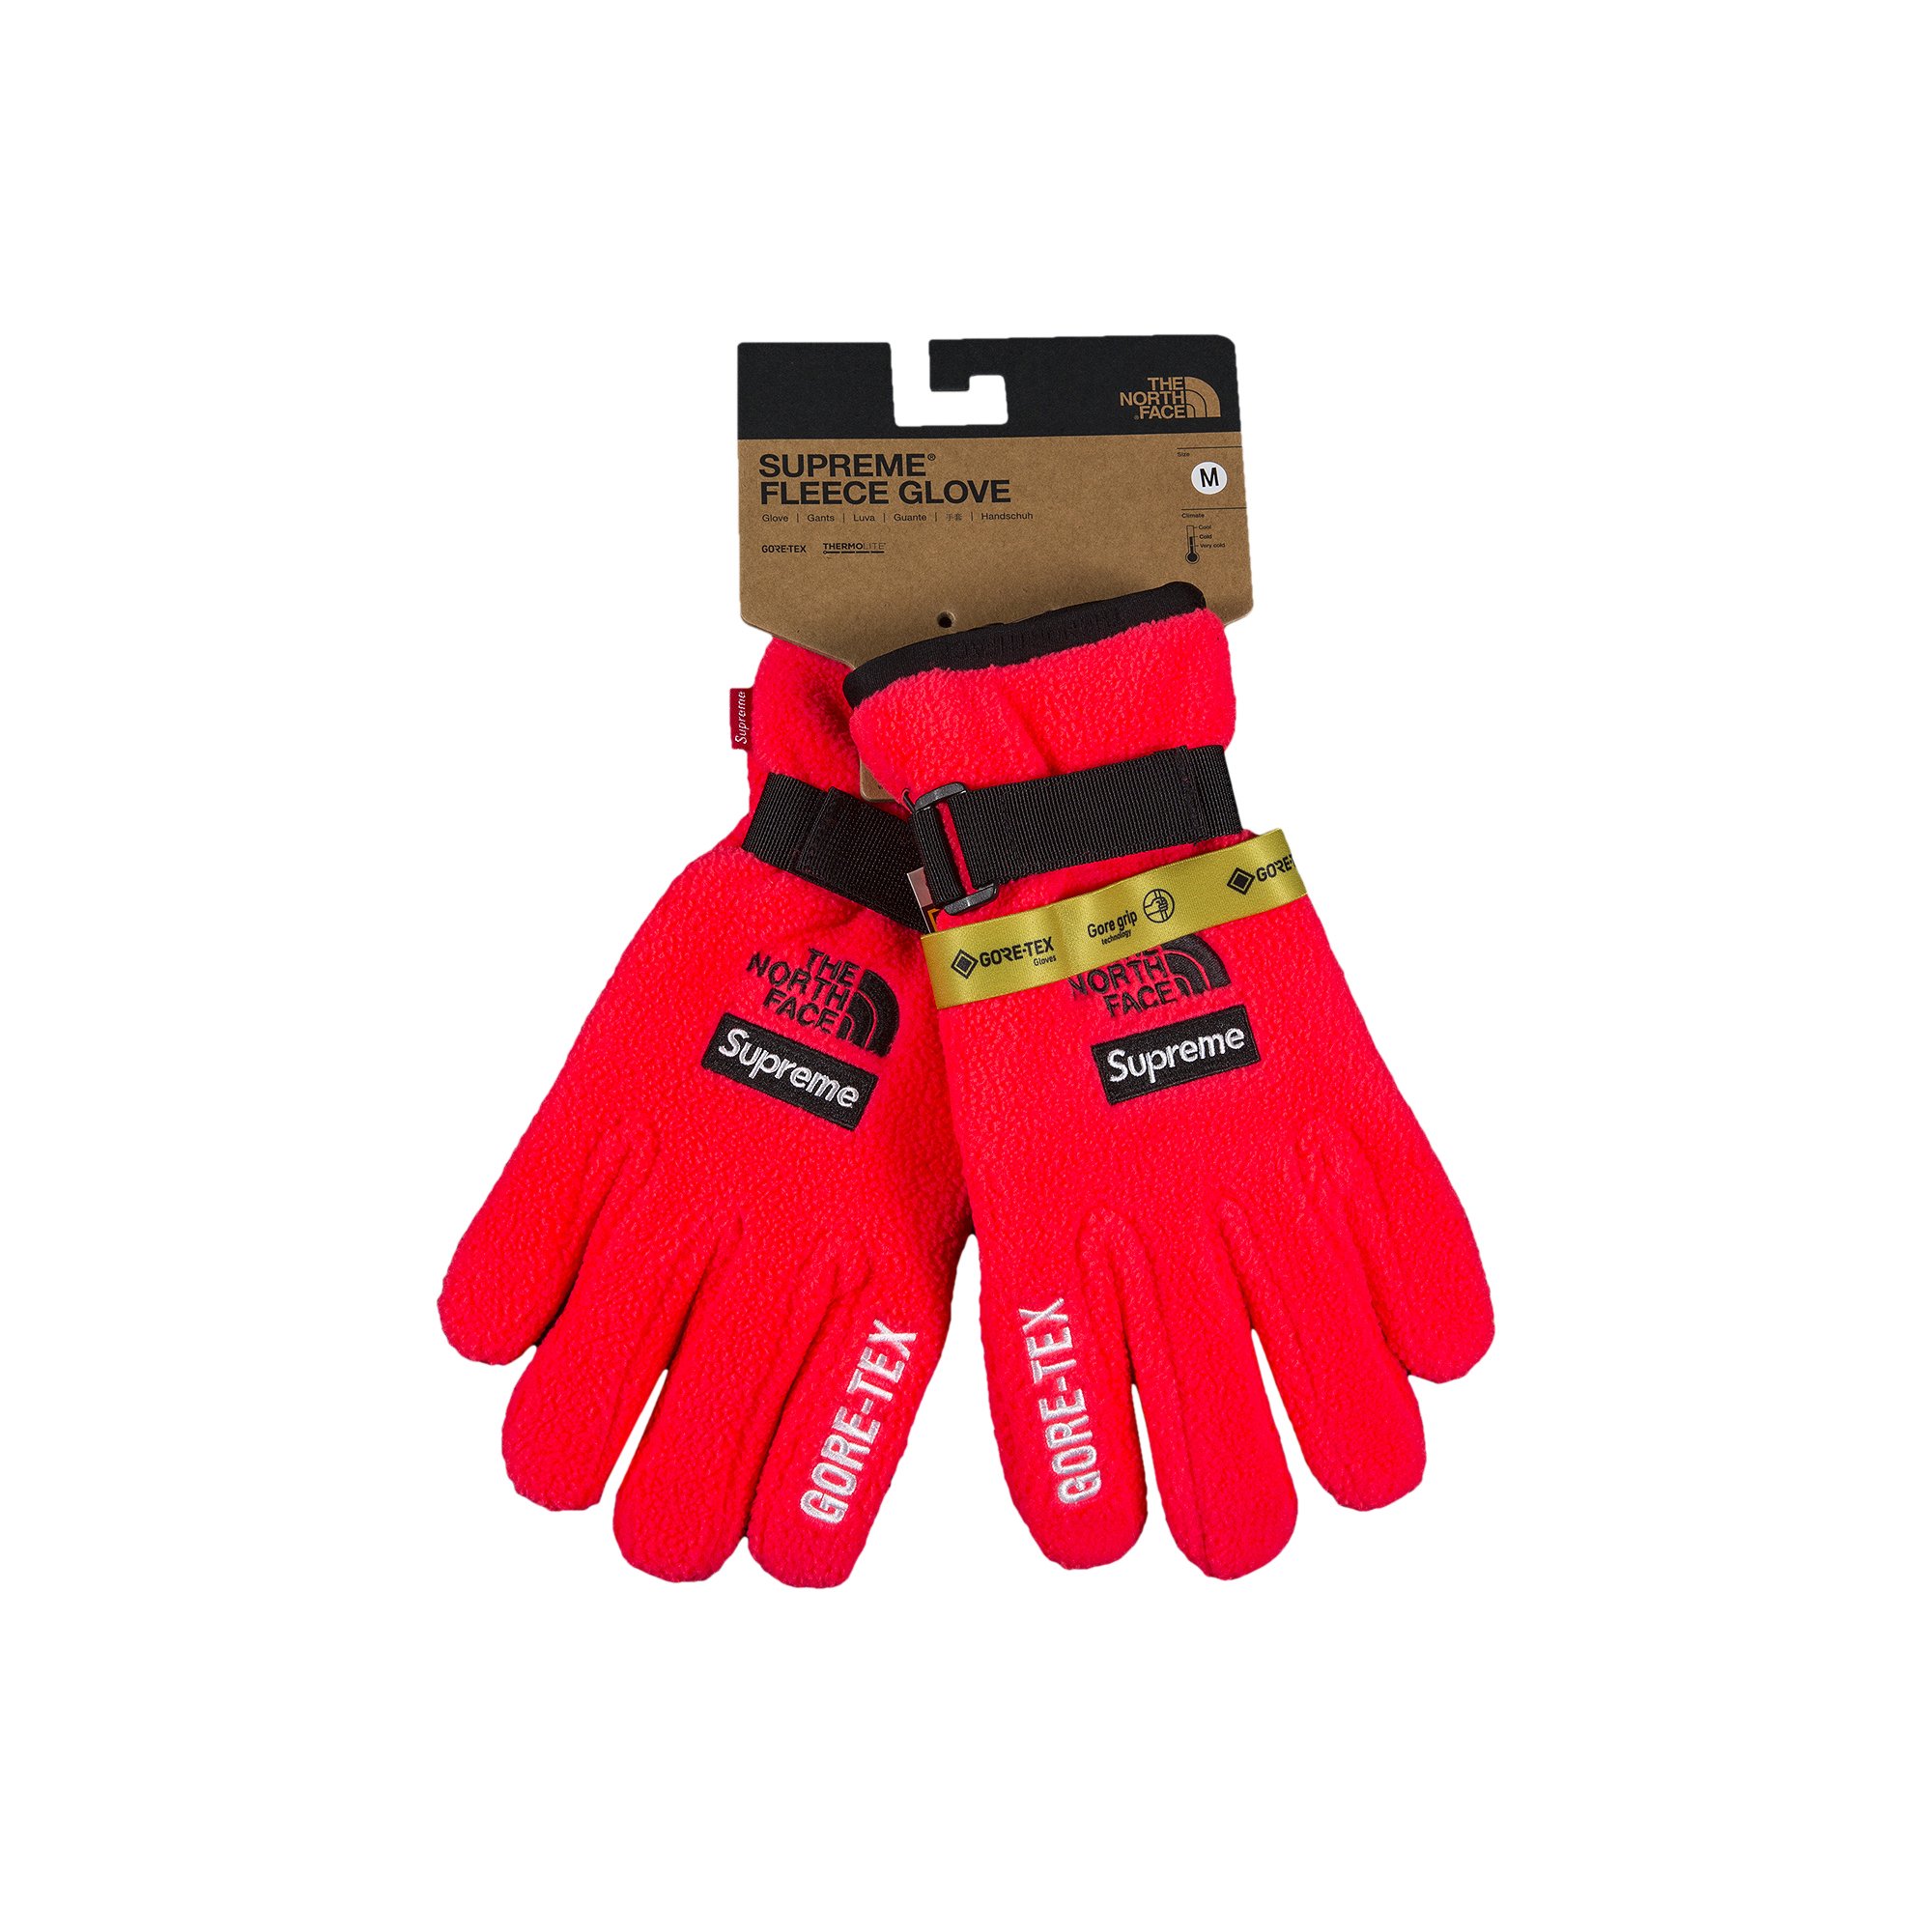 Supreme x The North Face RTG Fleece Glove 'Bright Red'